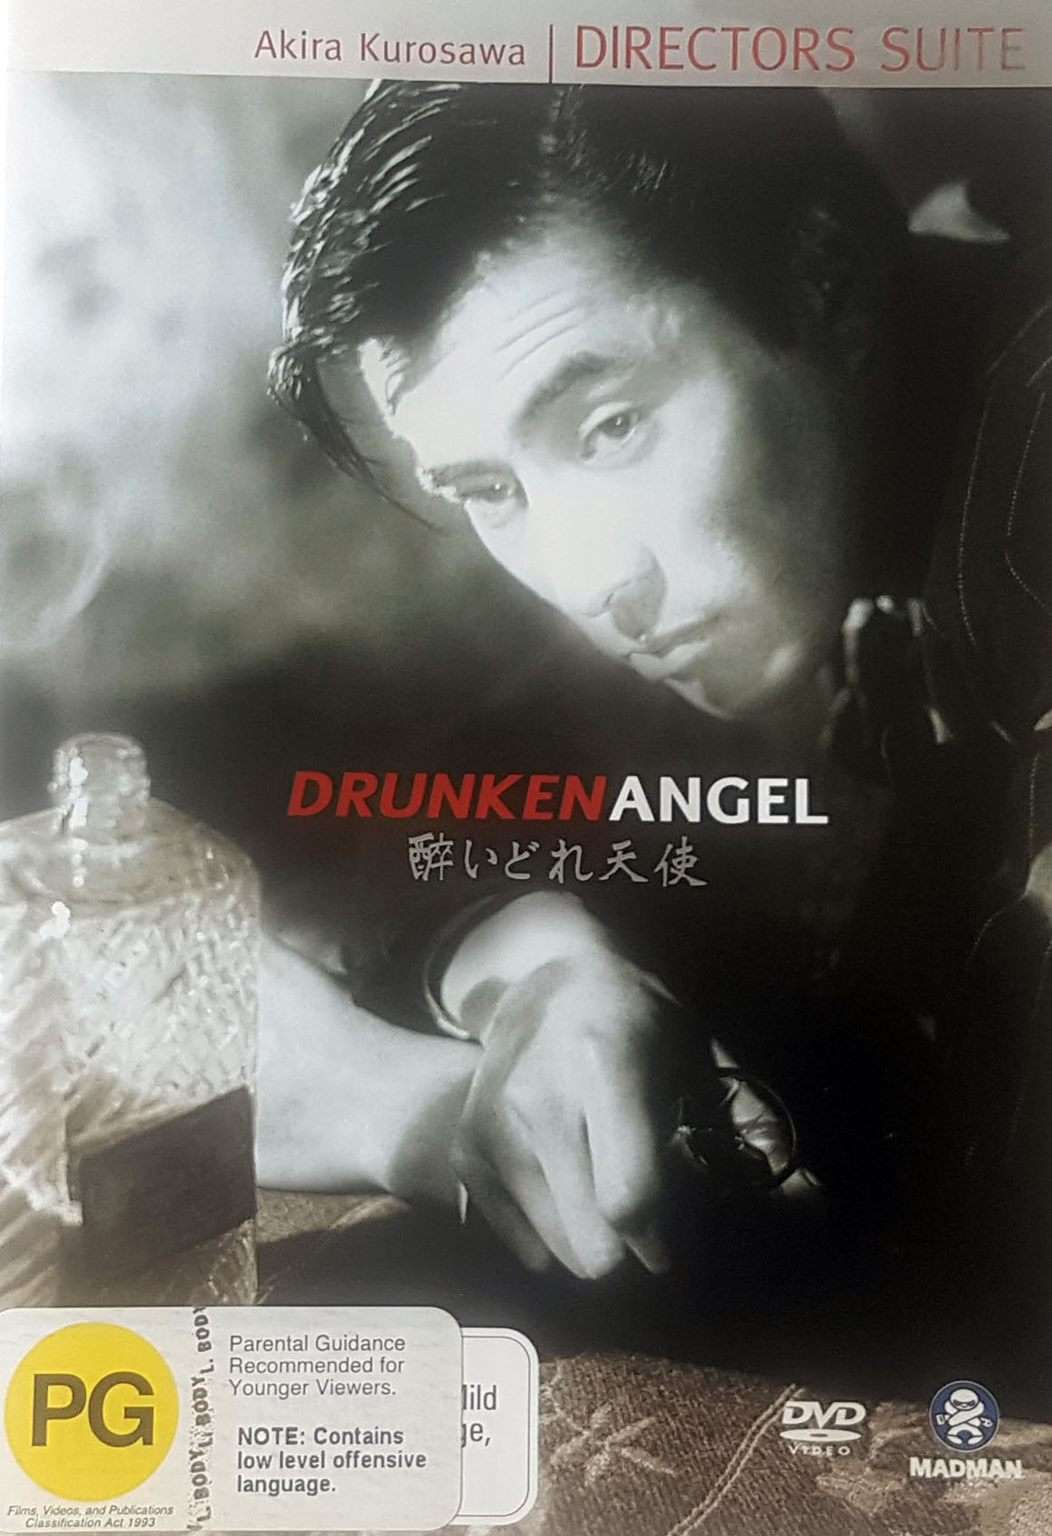 Drunken Angel Directors Suite Akira Kurosawa